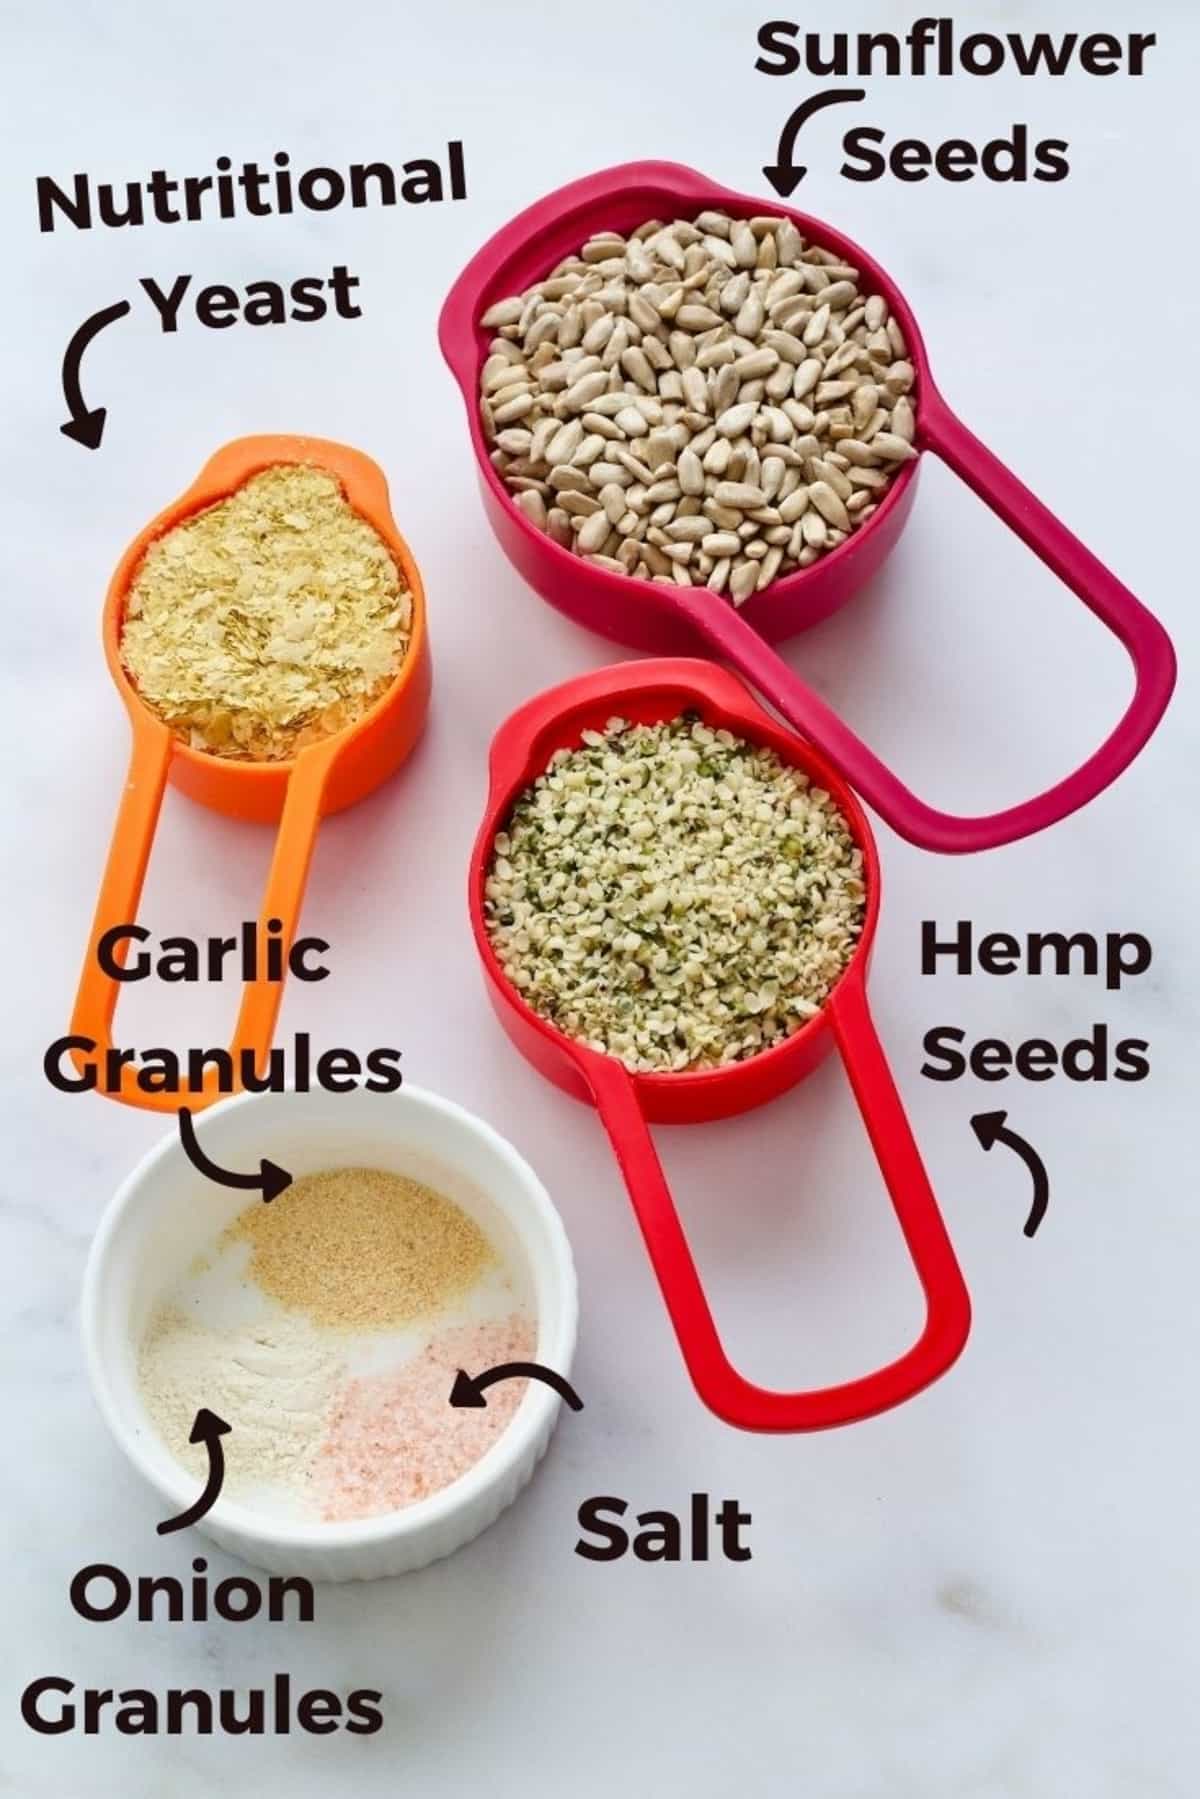 Ingredients for sunflower and hemp seeds vegan parmesan.